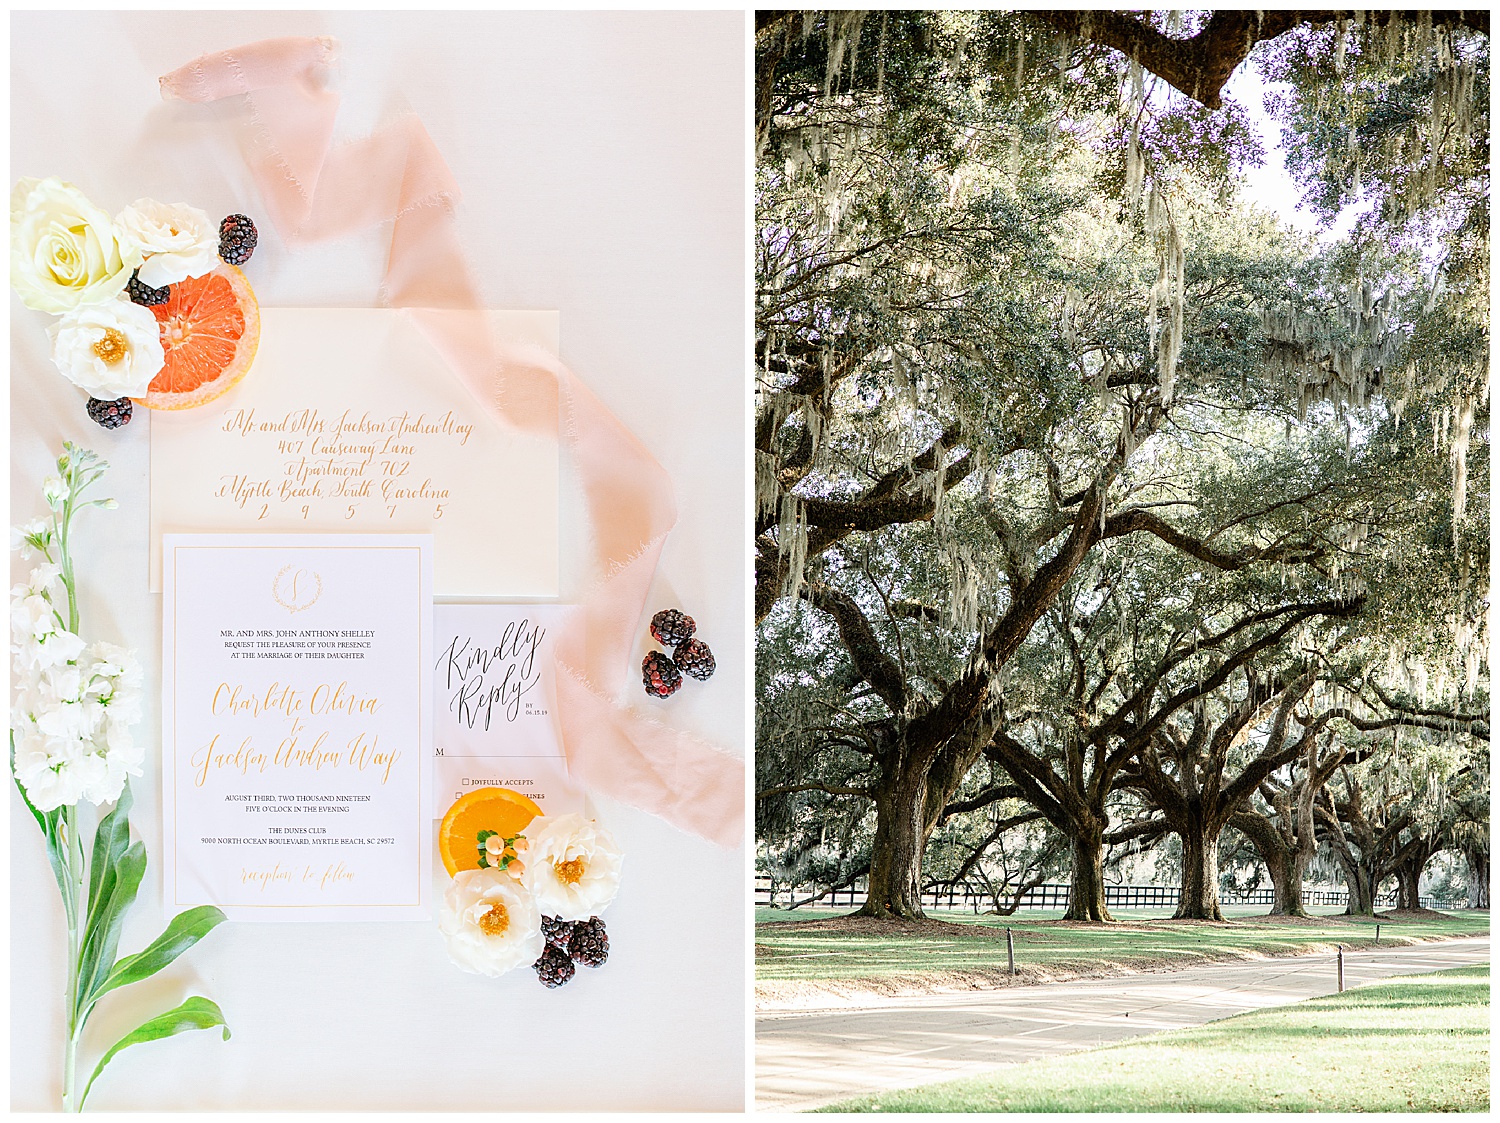 Airy Blush and White Wedding at Boone Hall Plantation — A Lowcountry Wedding  Blog & Magazine - Charleston, Savannah, Hilton Head, Myrtle Beach